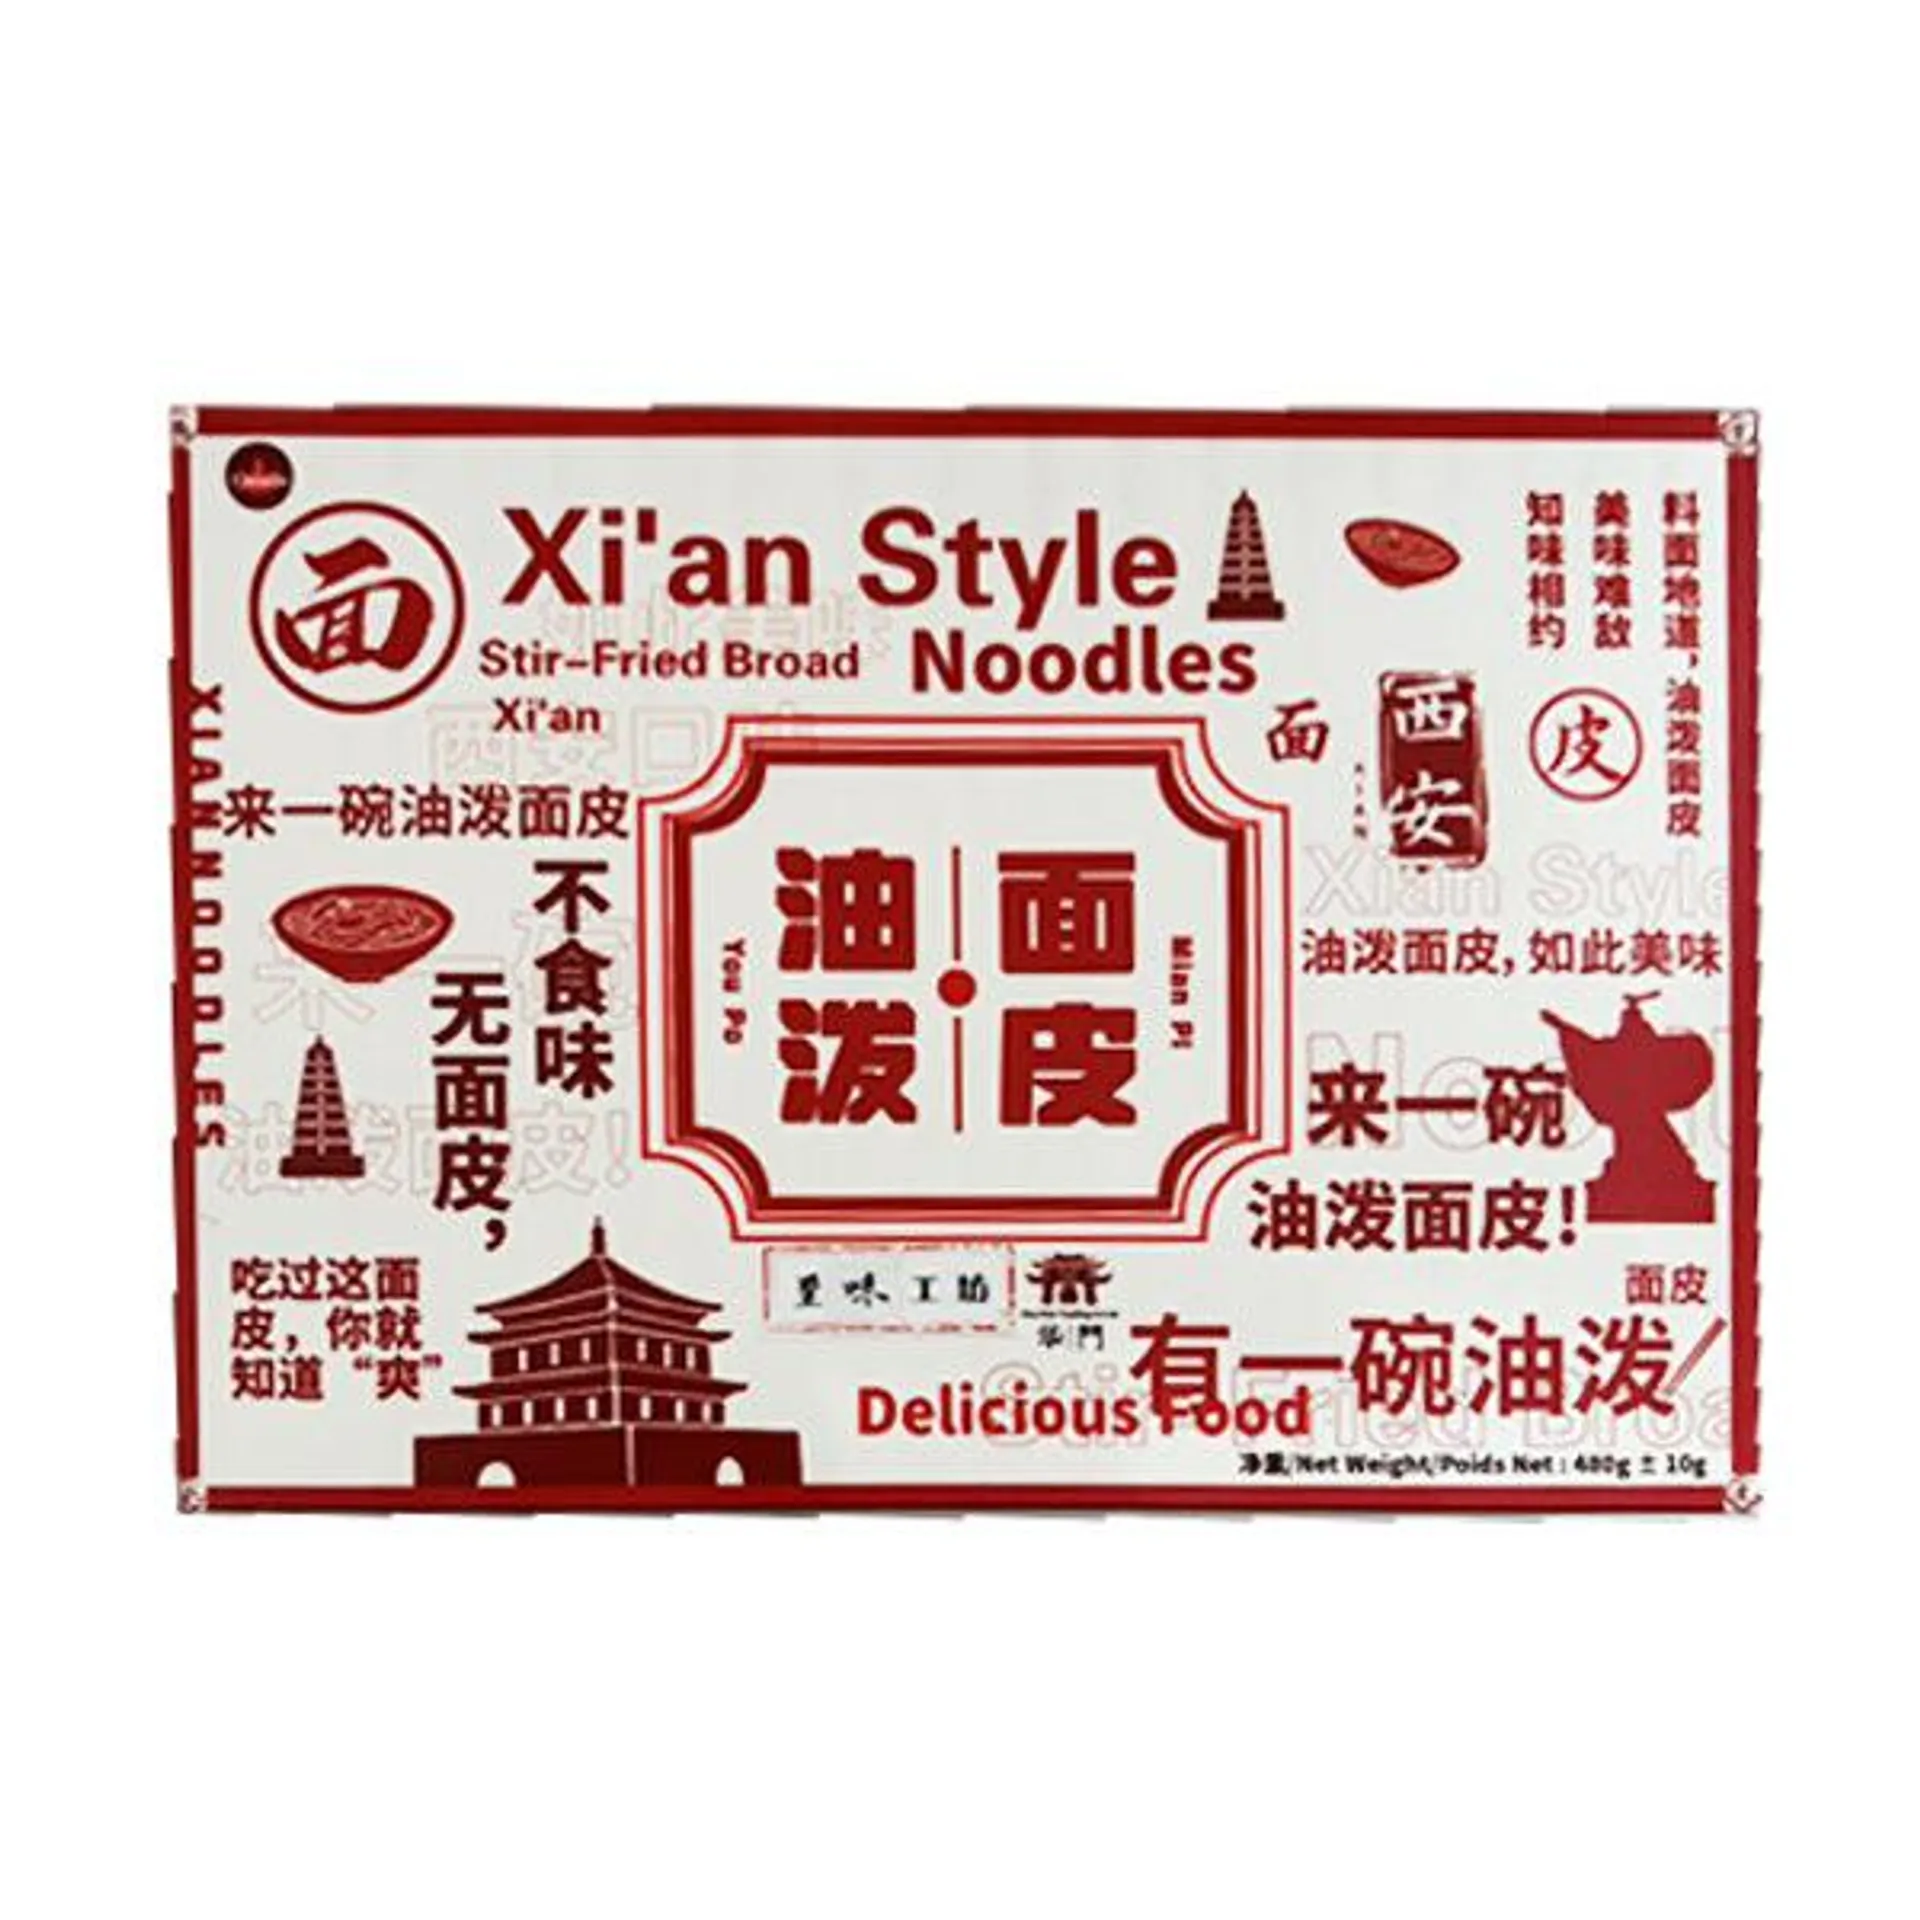 Xian Stir-Fried Broad Noodles 480g